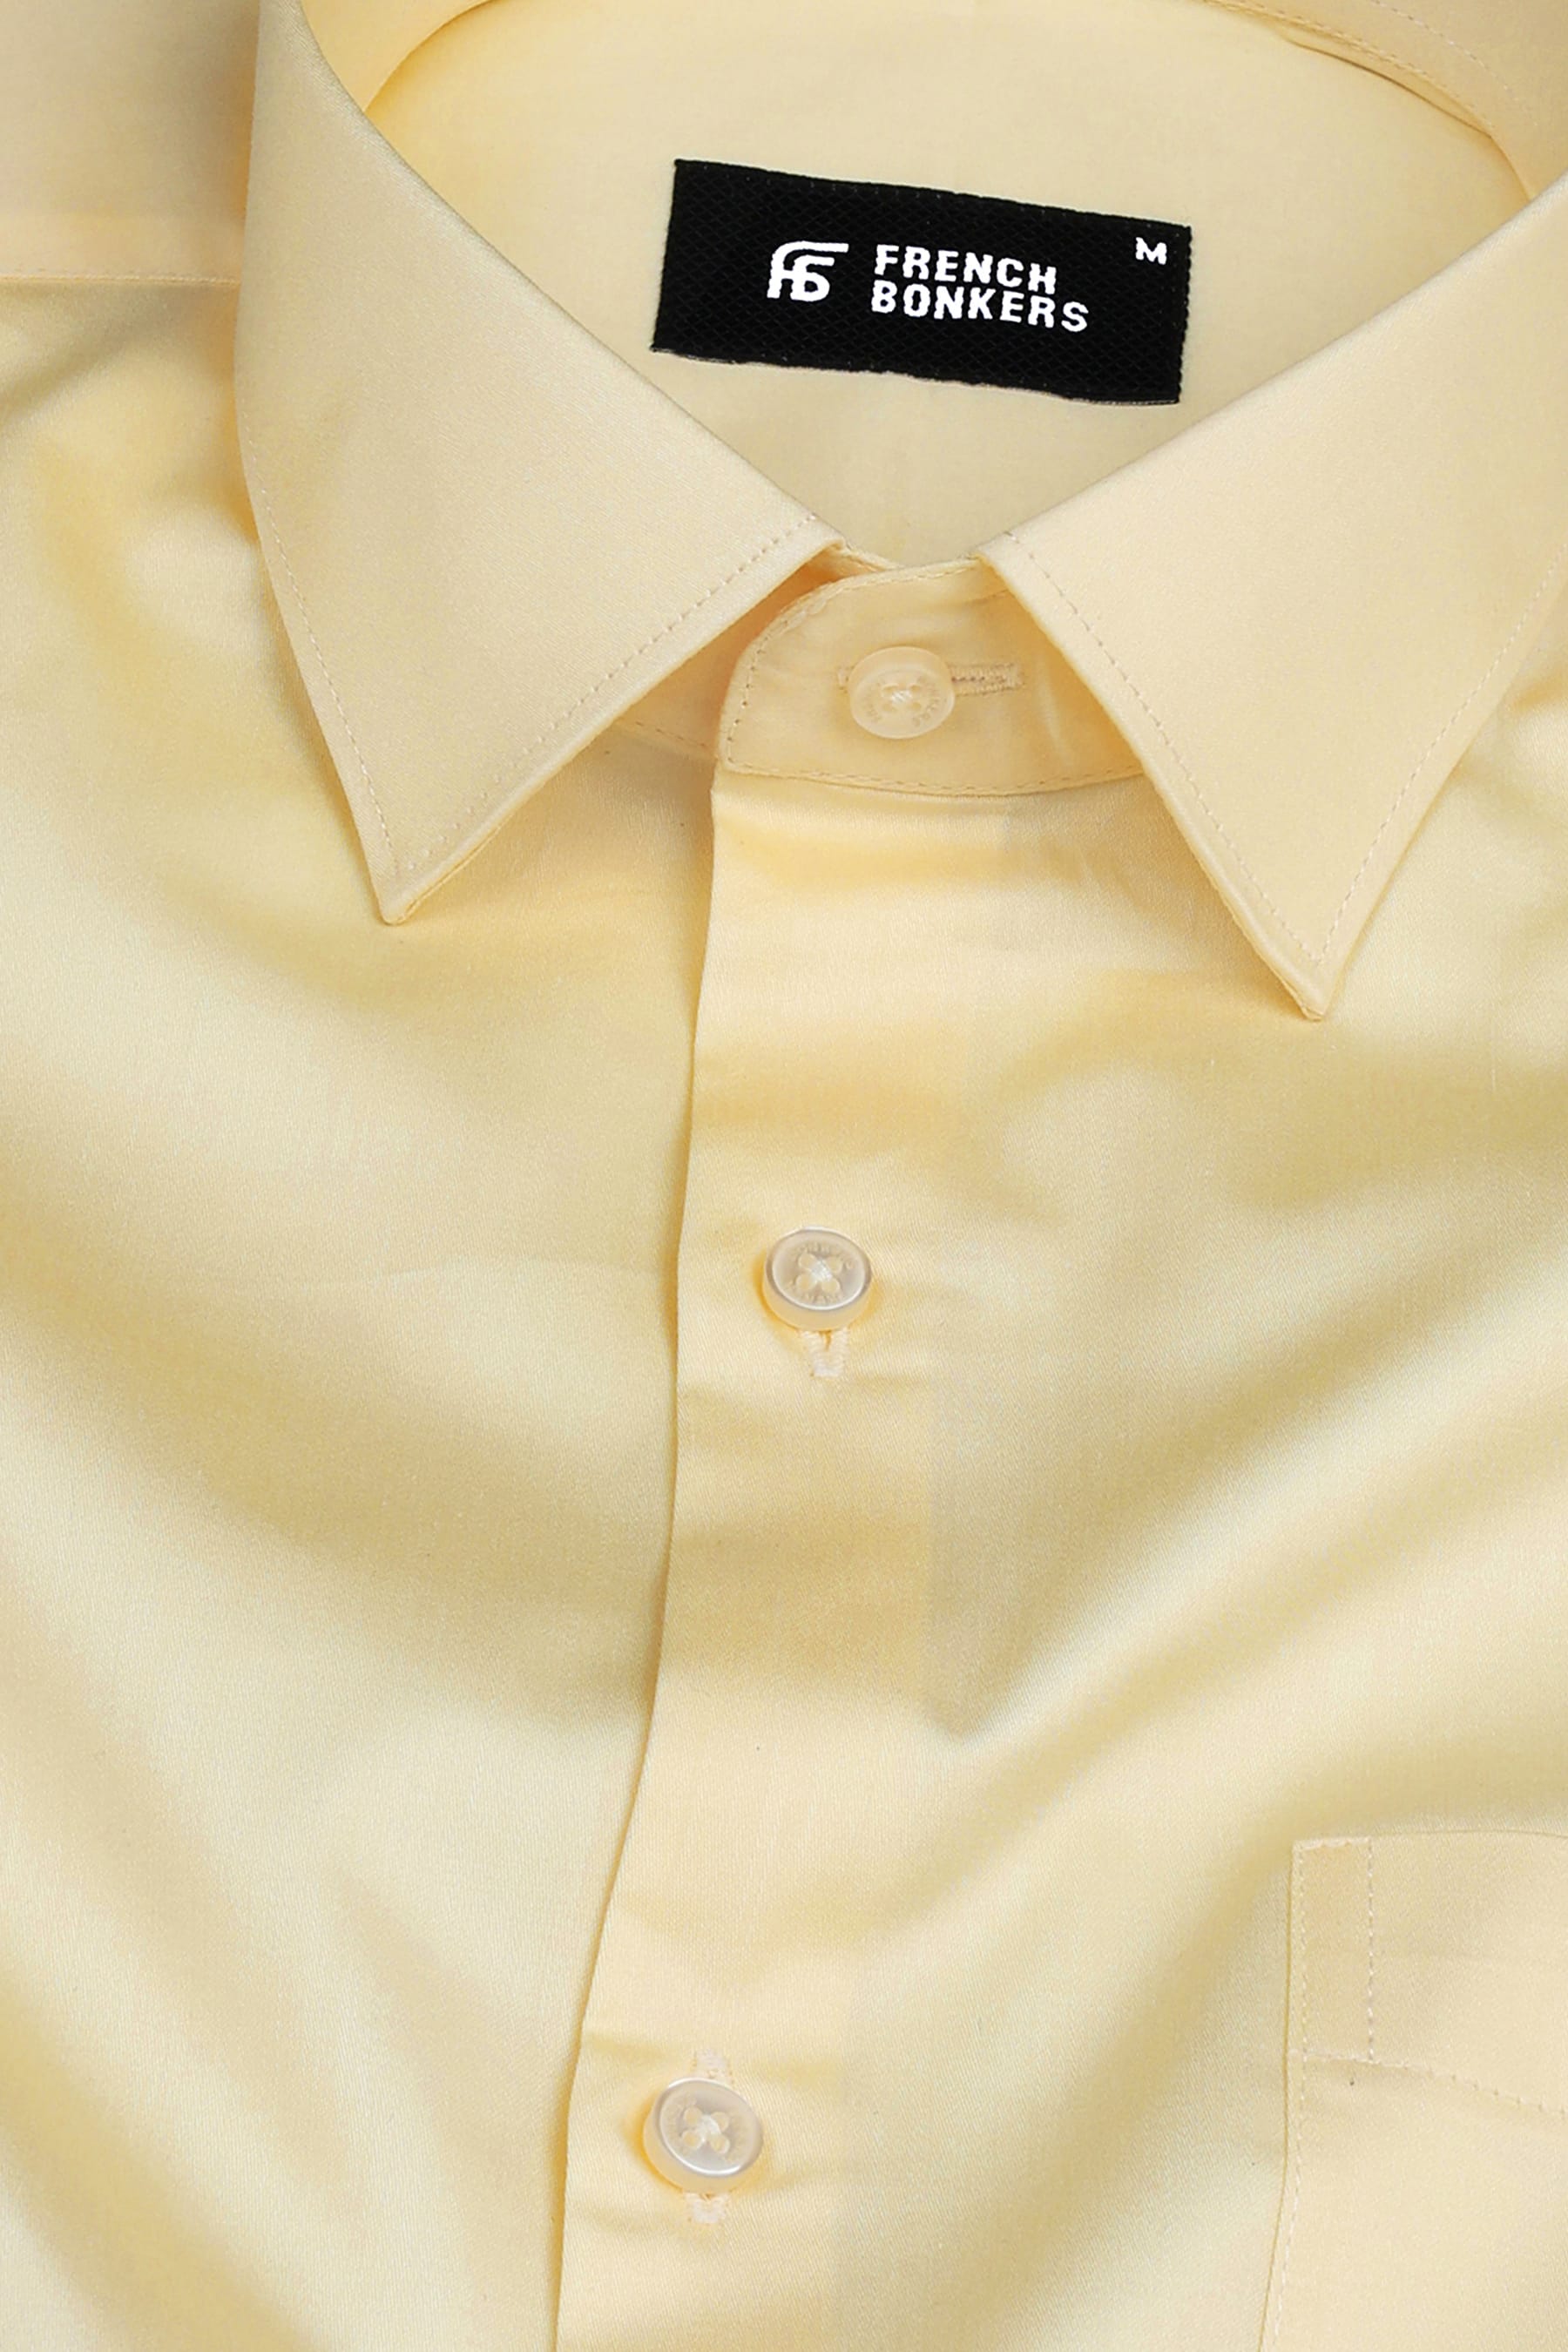 Canary yellow cotton satin shirt